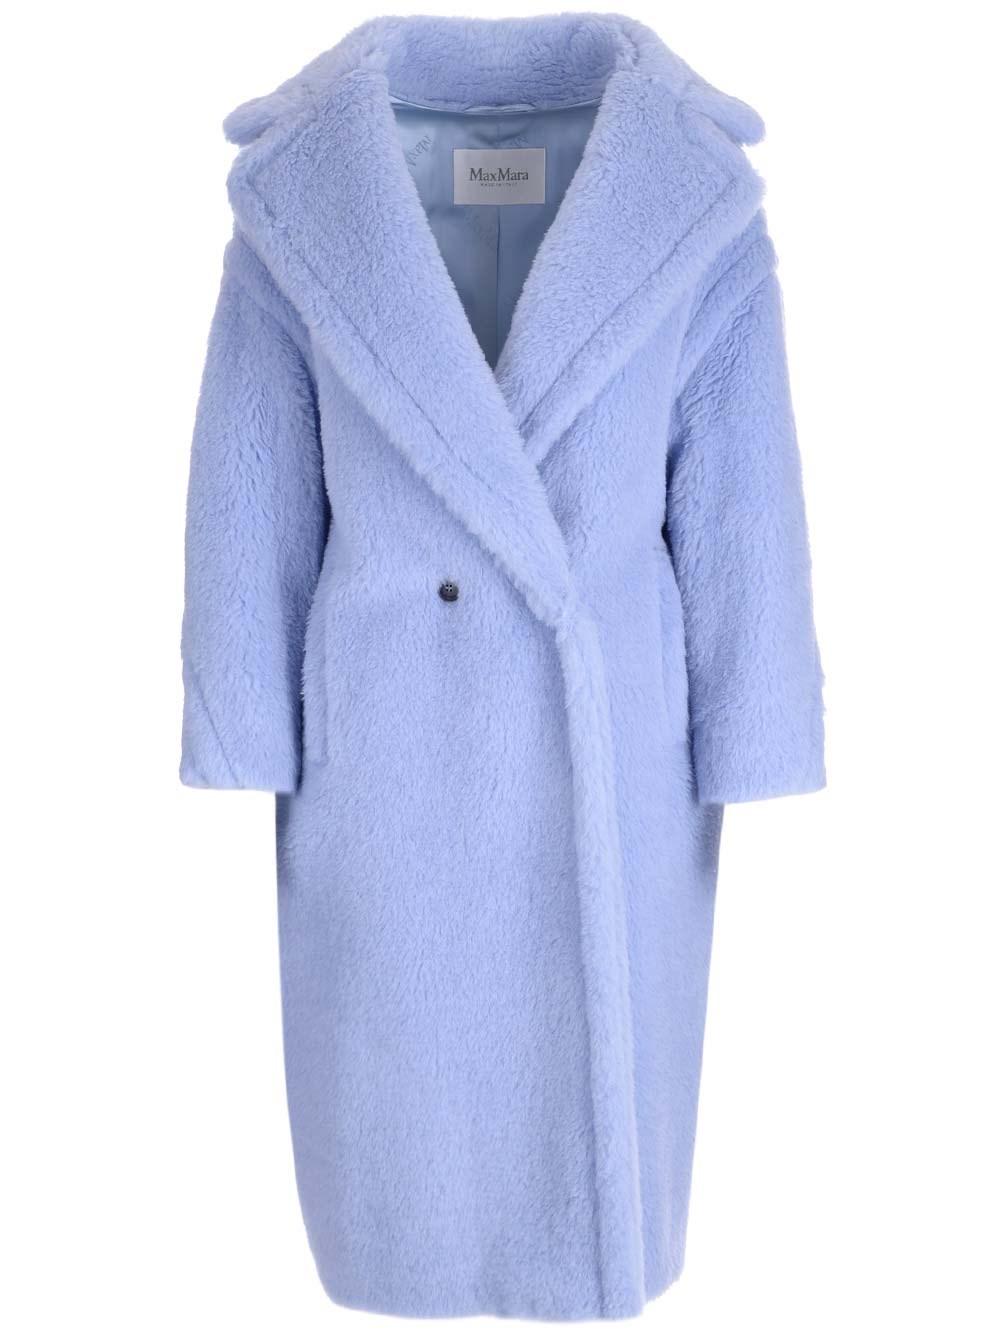 Max Mara Light Blue Teddy Coat | Lyst